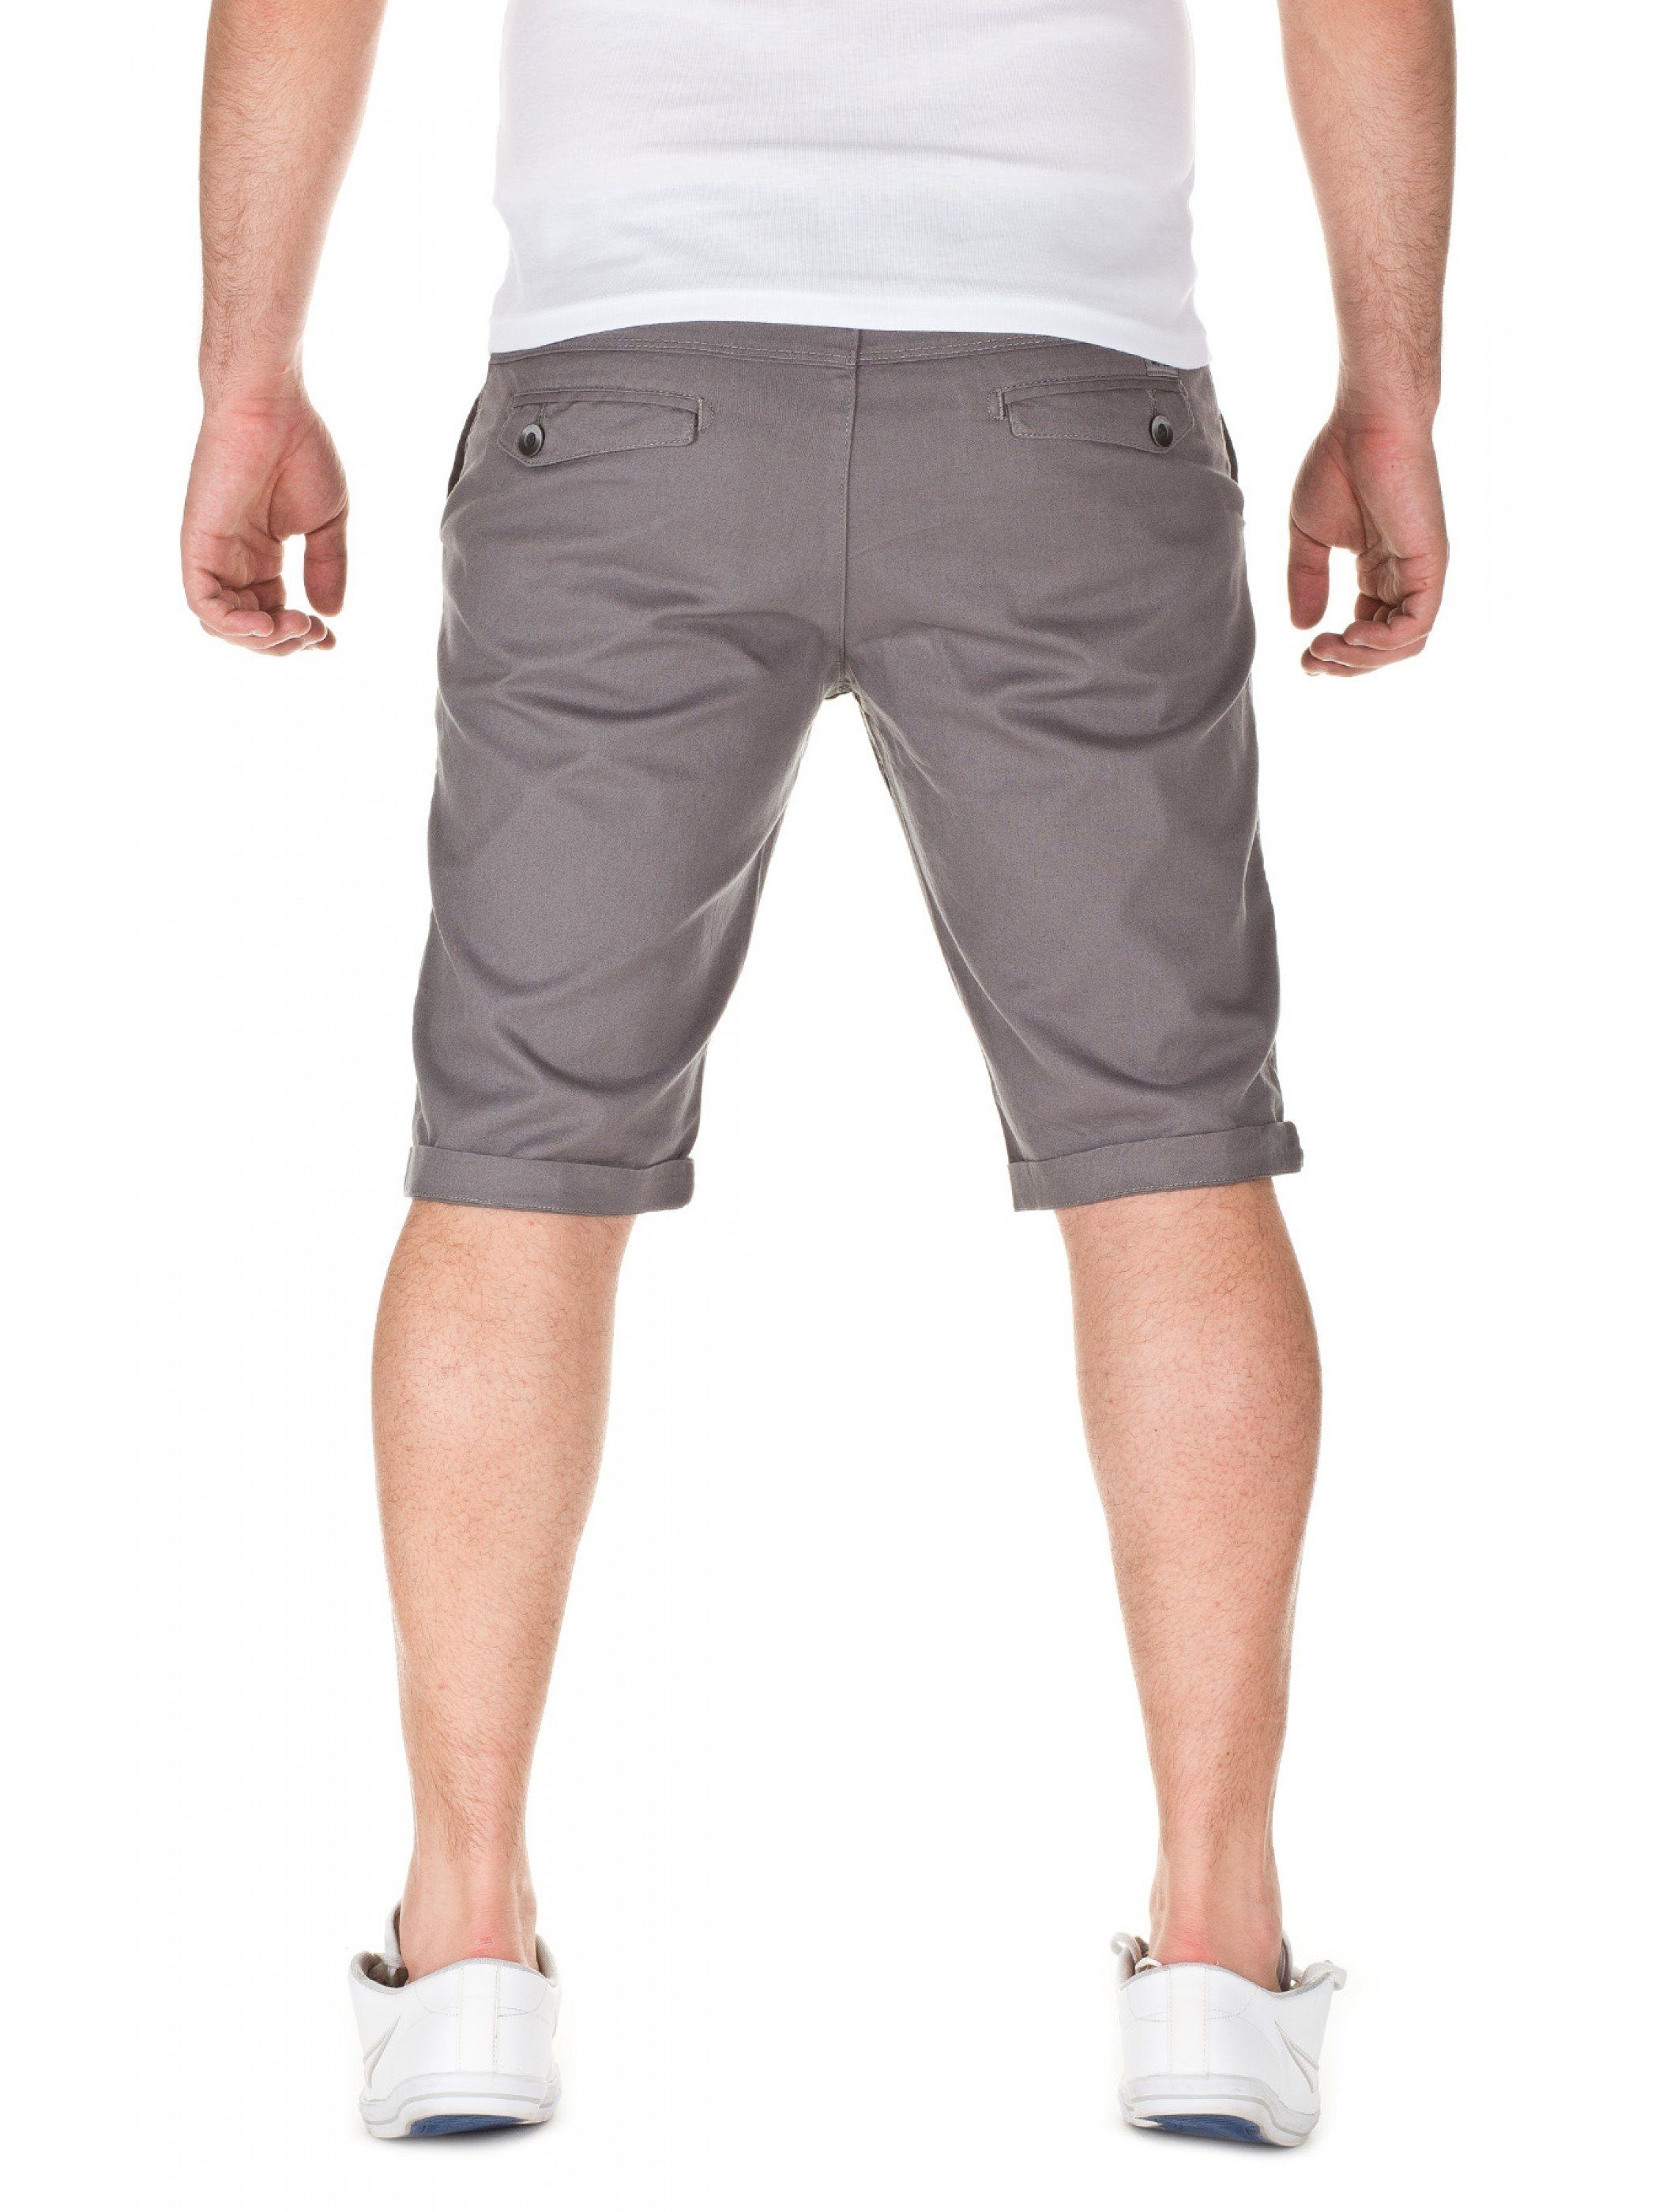 Shorts shorts Grau - Chino Alex Unifarbe WOTEGA (grey in 4236) WOTEGA